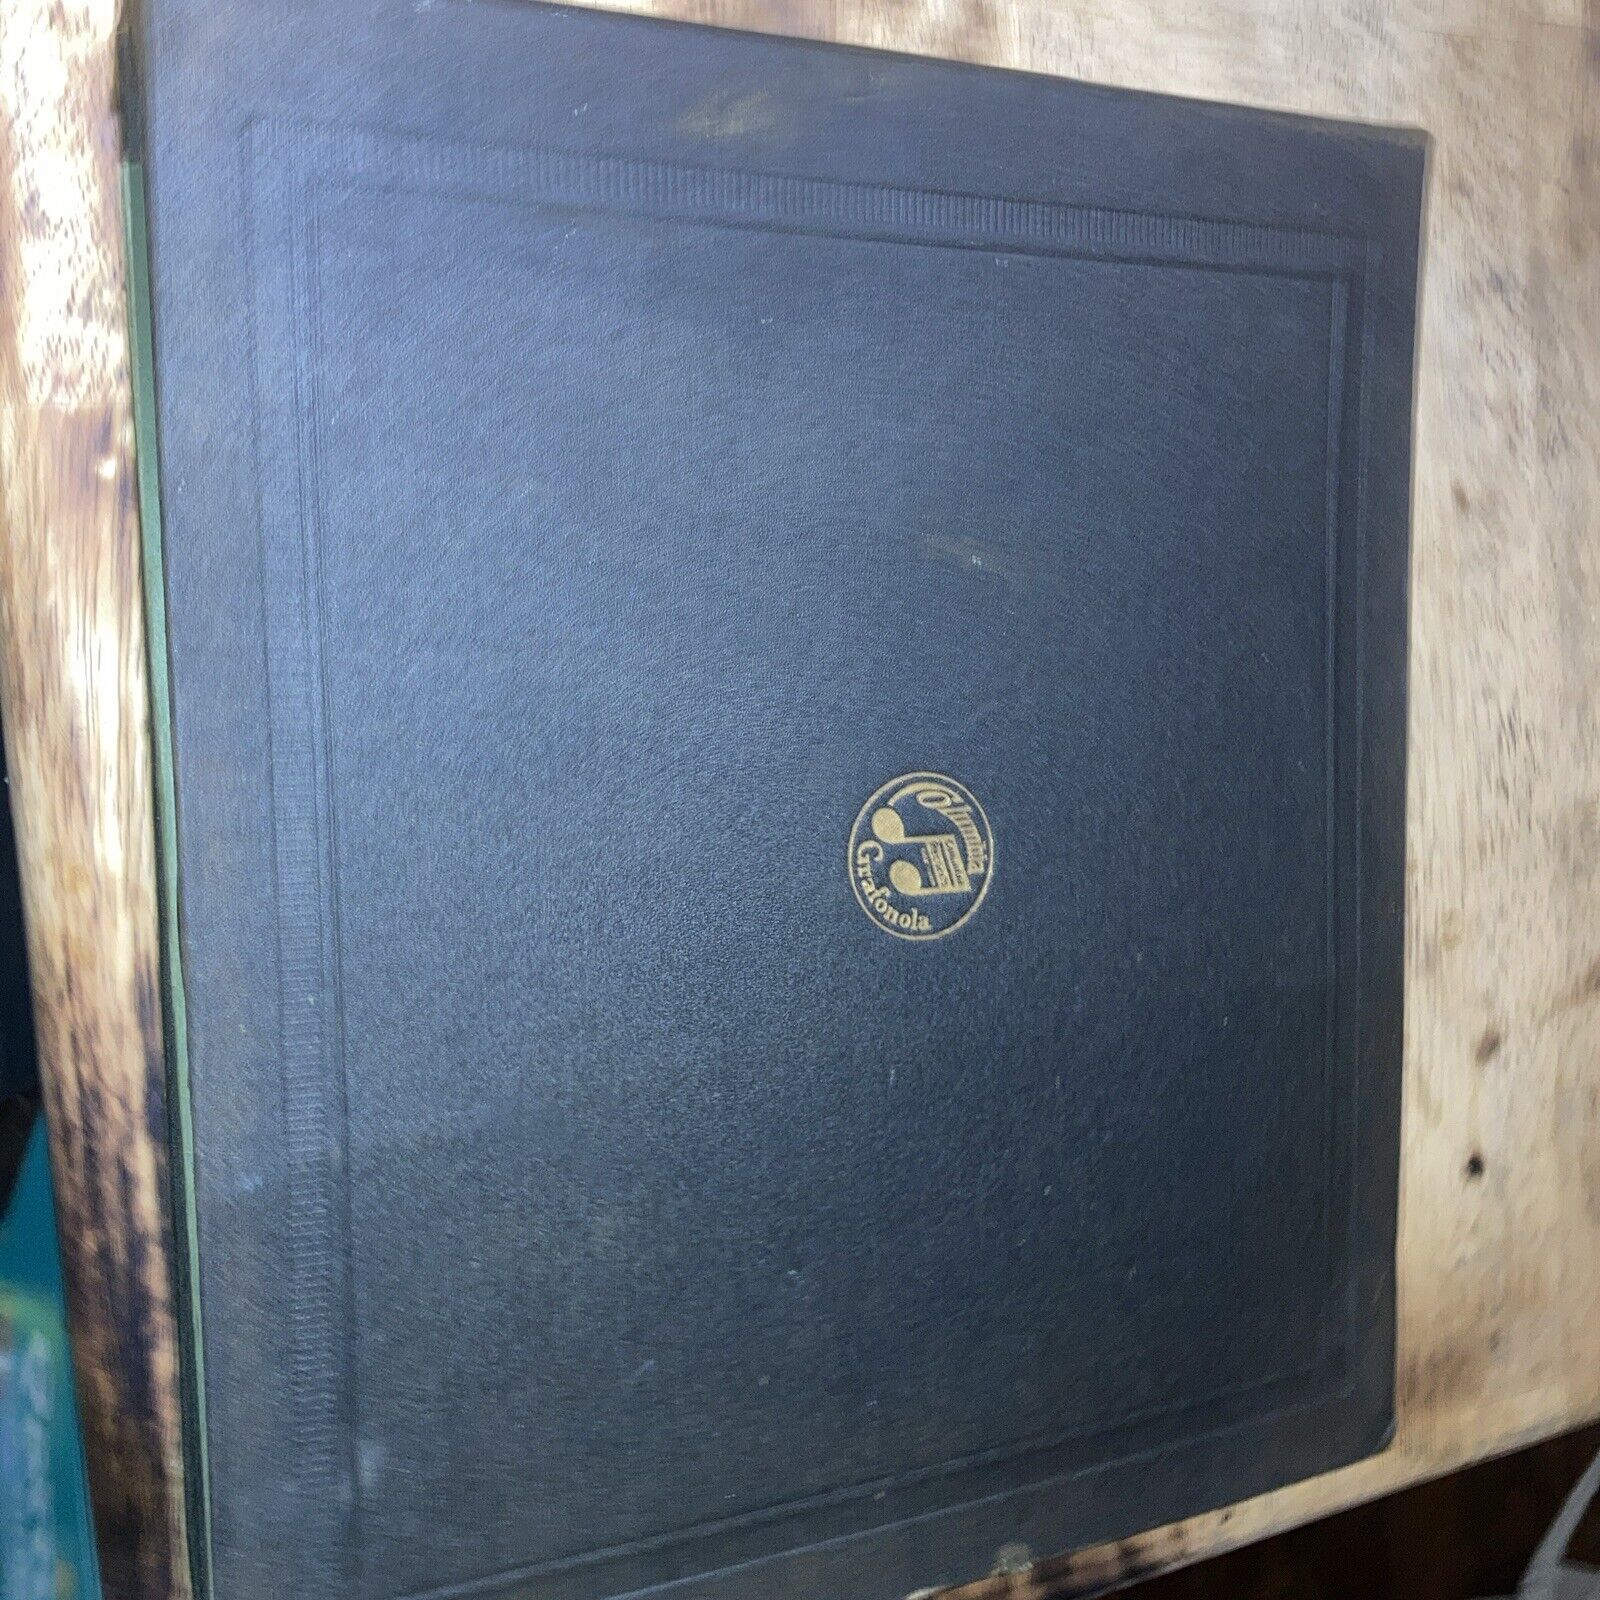 Vintage Antique Columbia Grafonola record case in great condition